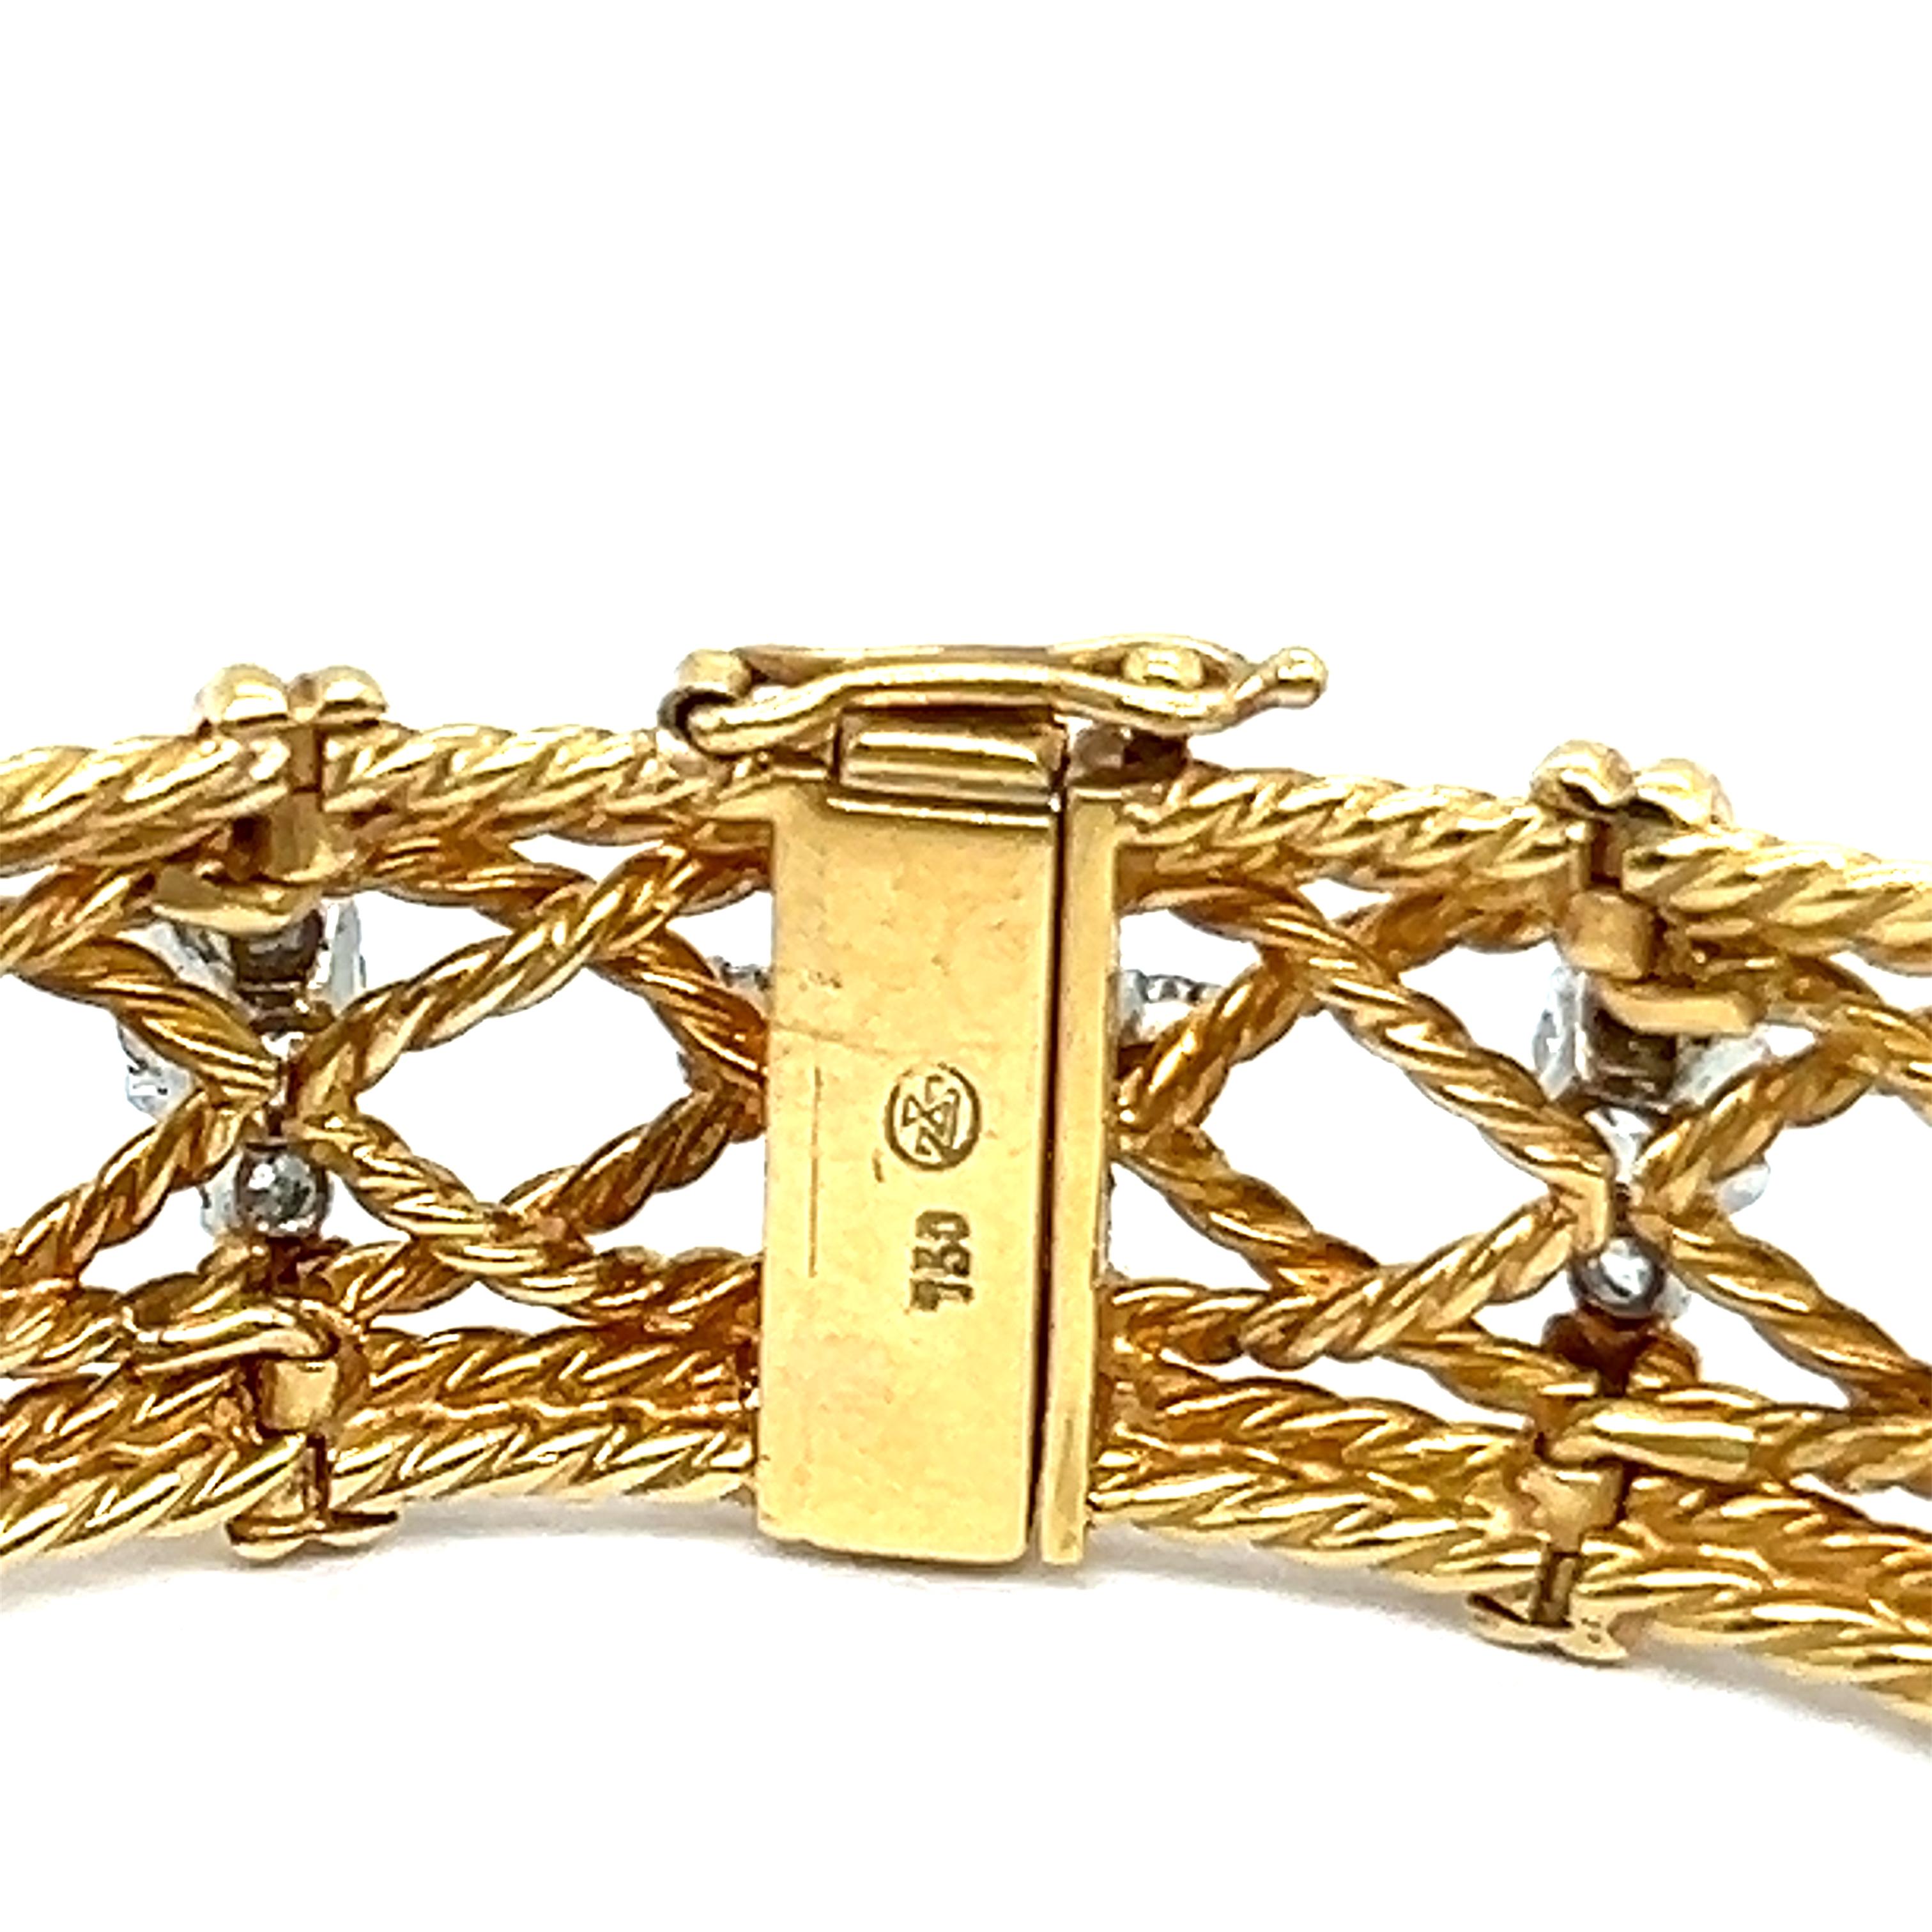 Vintage Bracelet with Diamonds in 18 Karat Gold by Gübelin For Sale 2